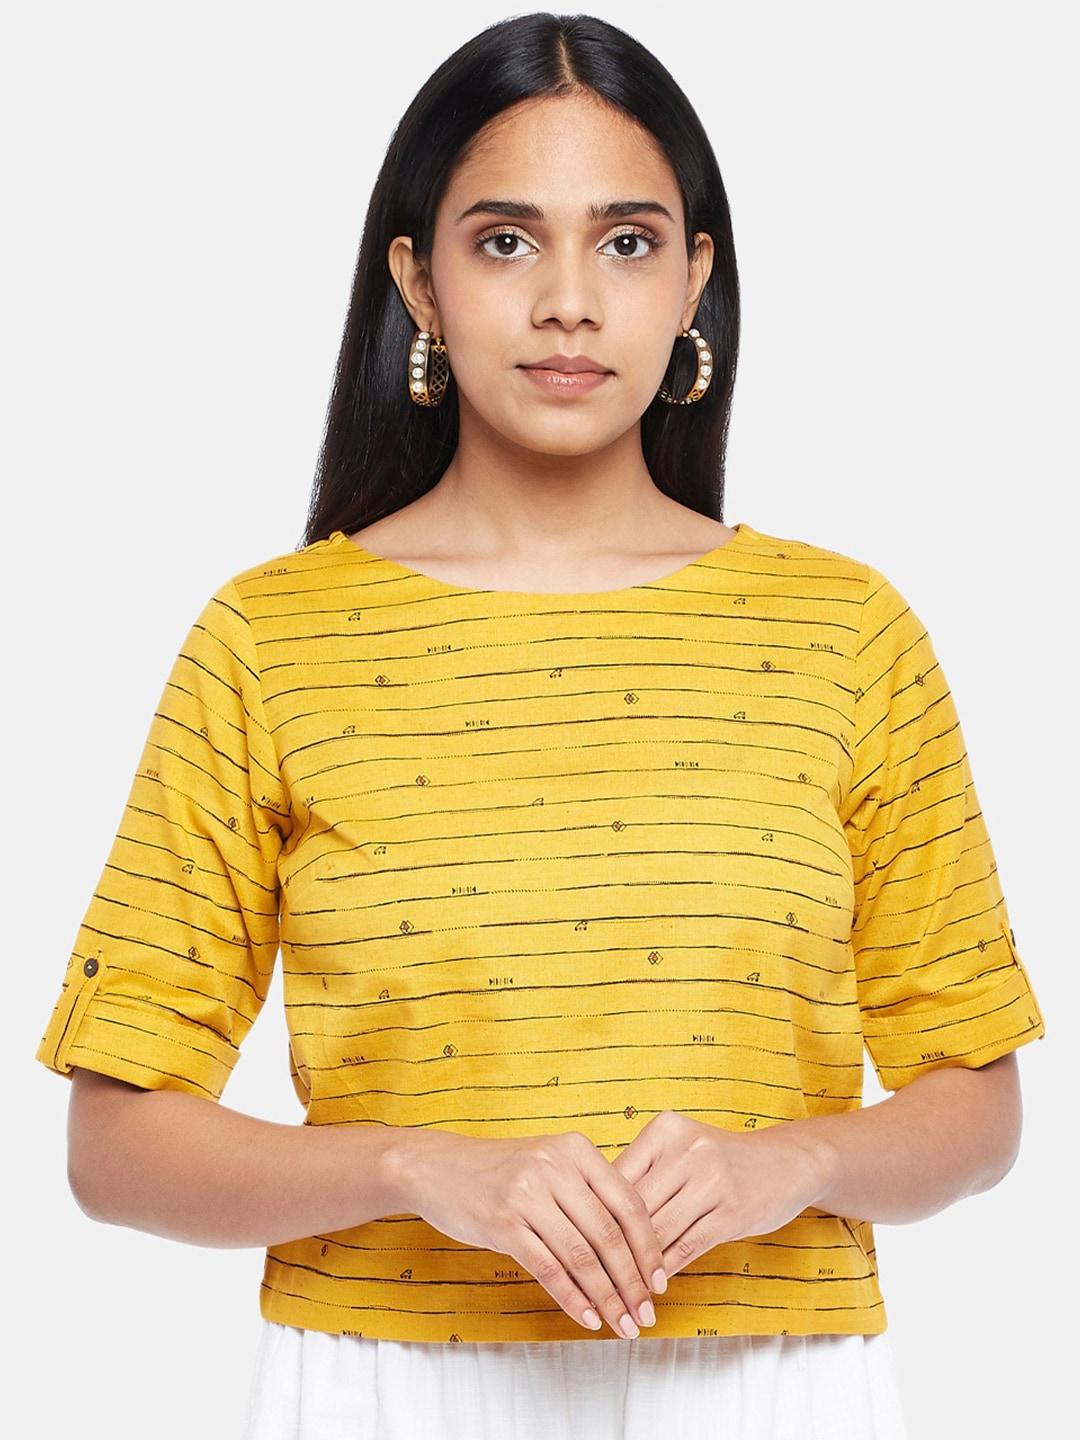 akkriti by pantaloons mustard yellow & black striped regular top